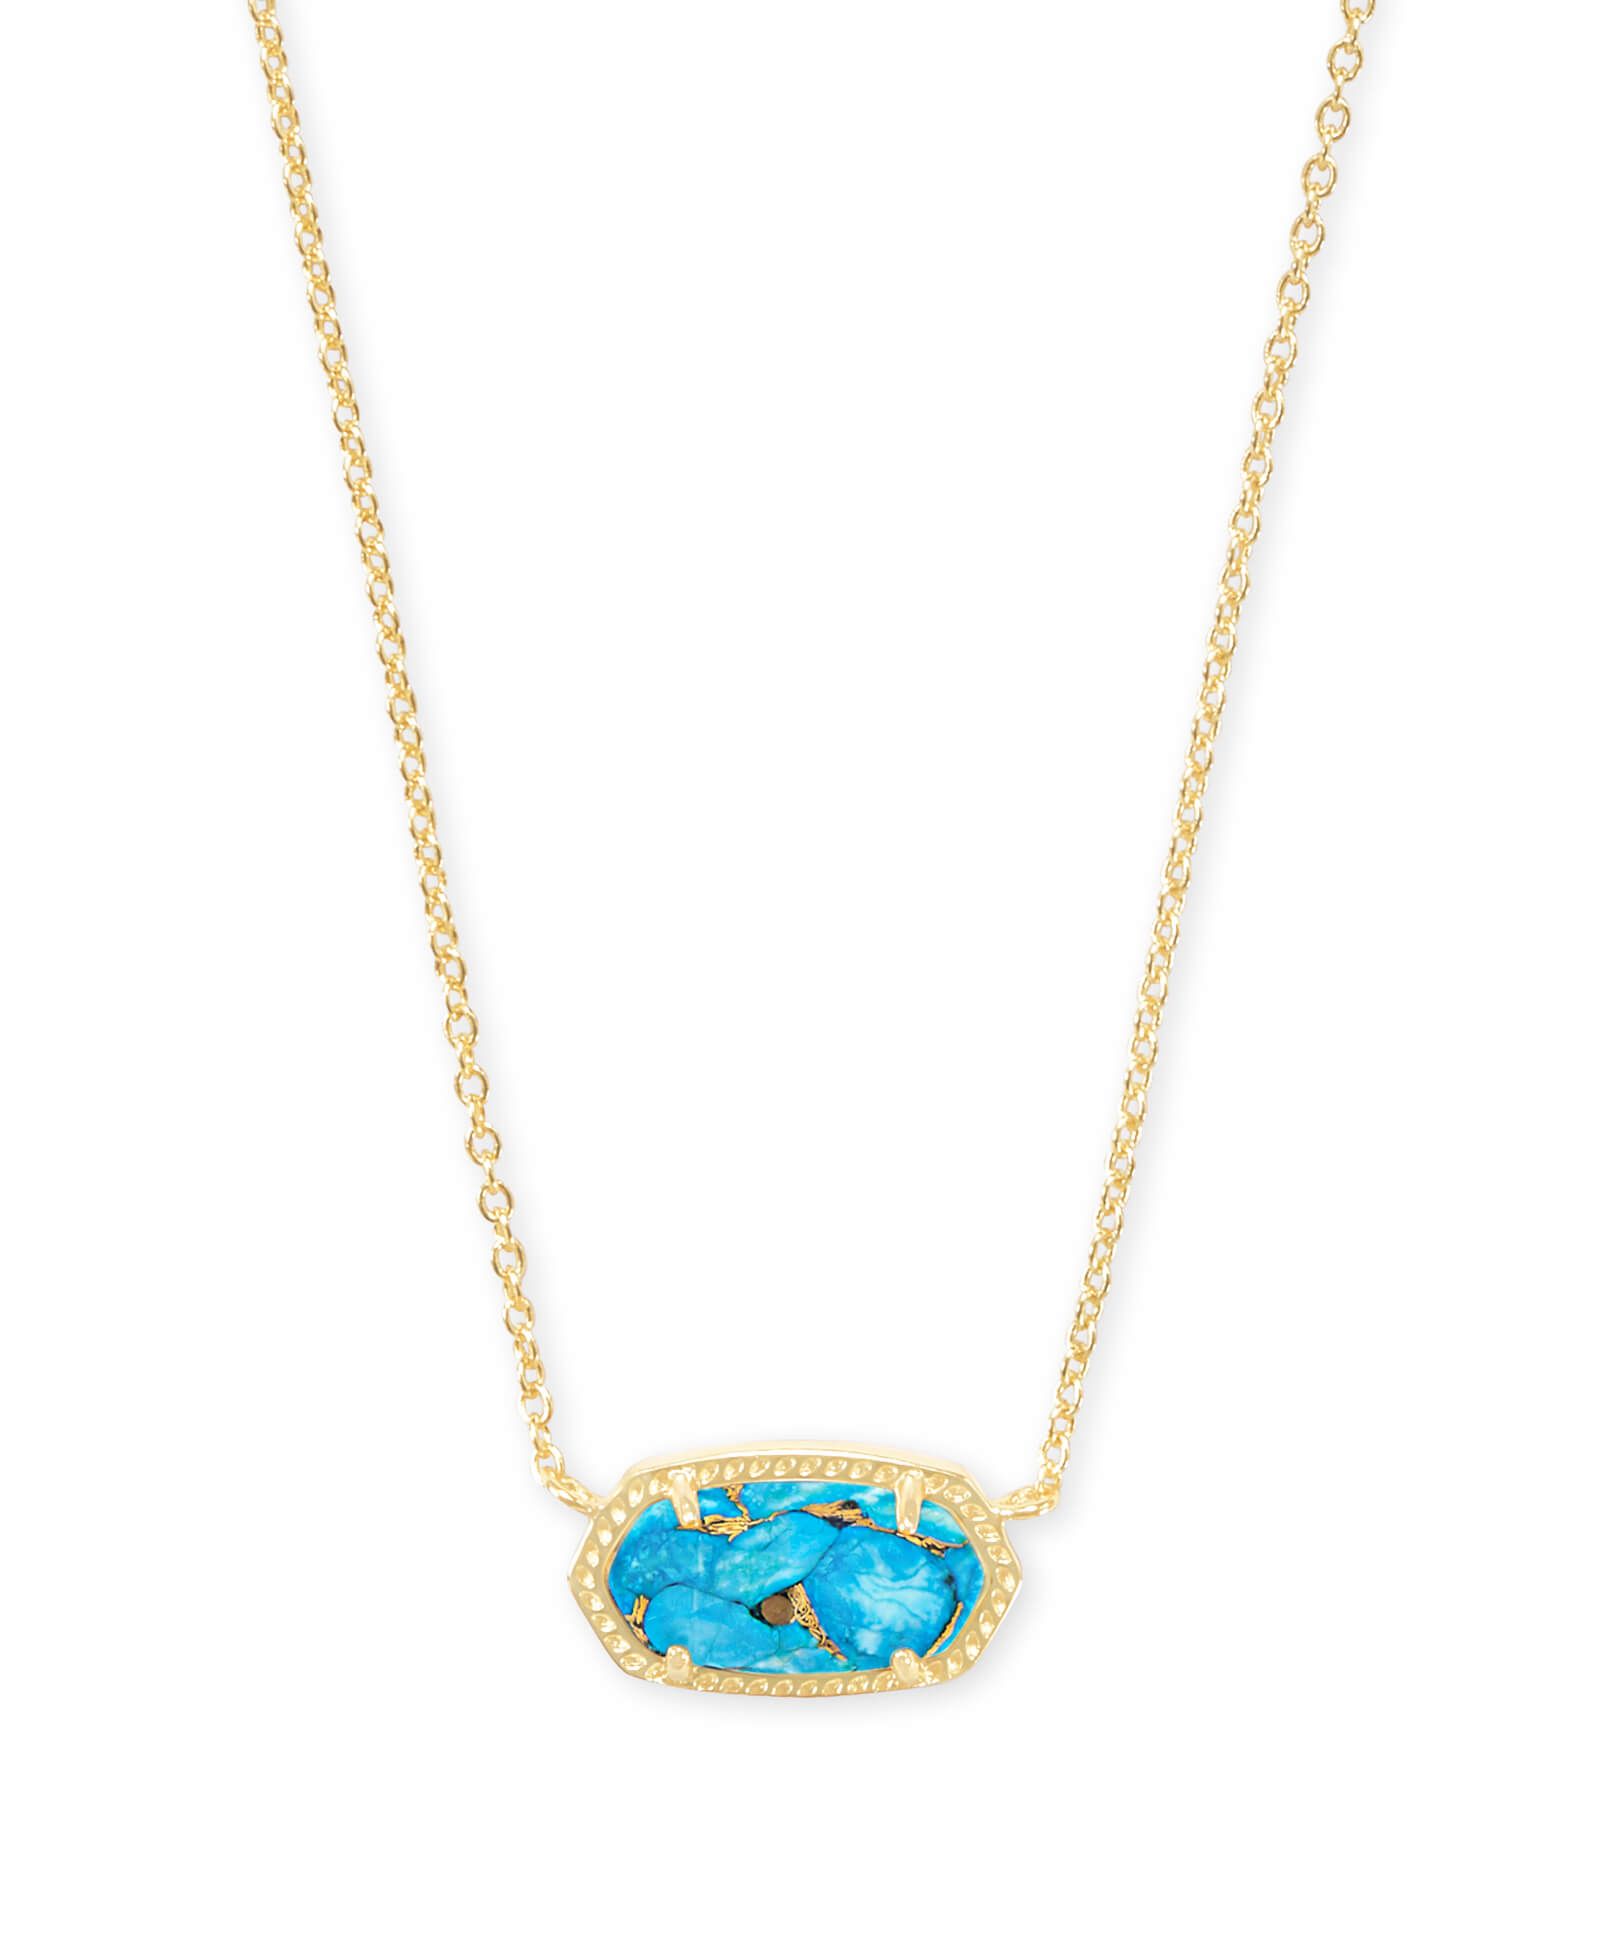 Elisa Gold Pendant Necklace in Bronze Veined Turquoise Magnesite | Kendra Scott | Kendra Scott